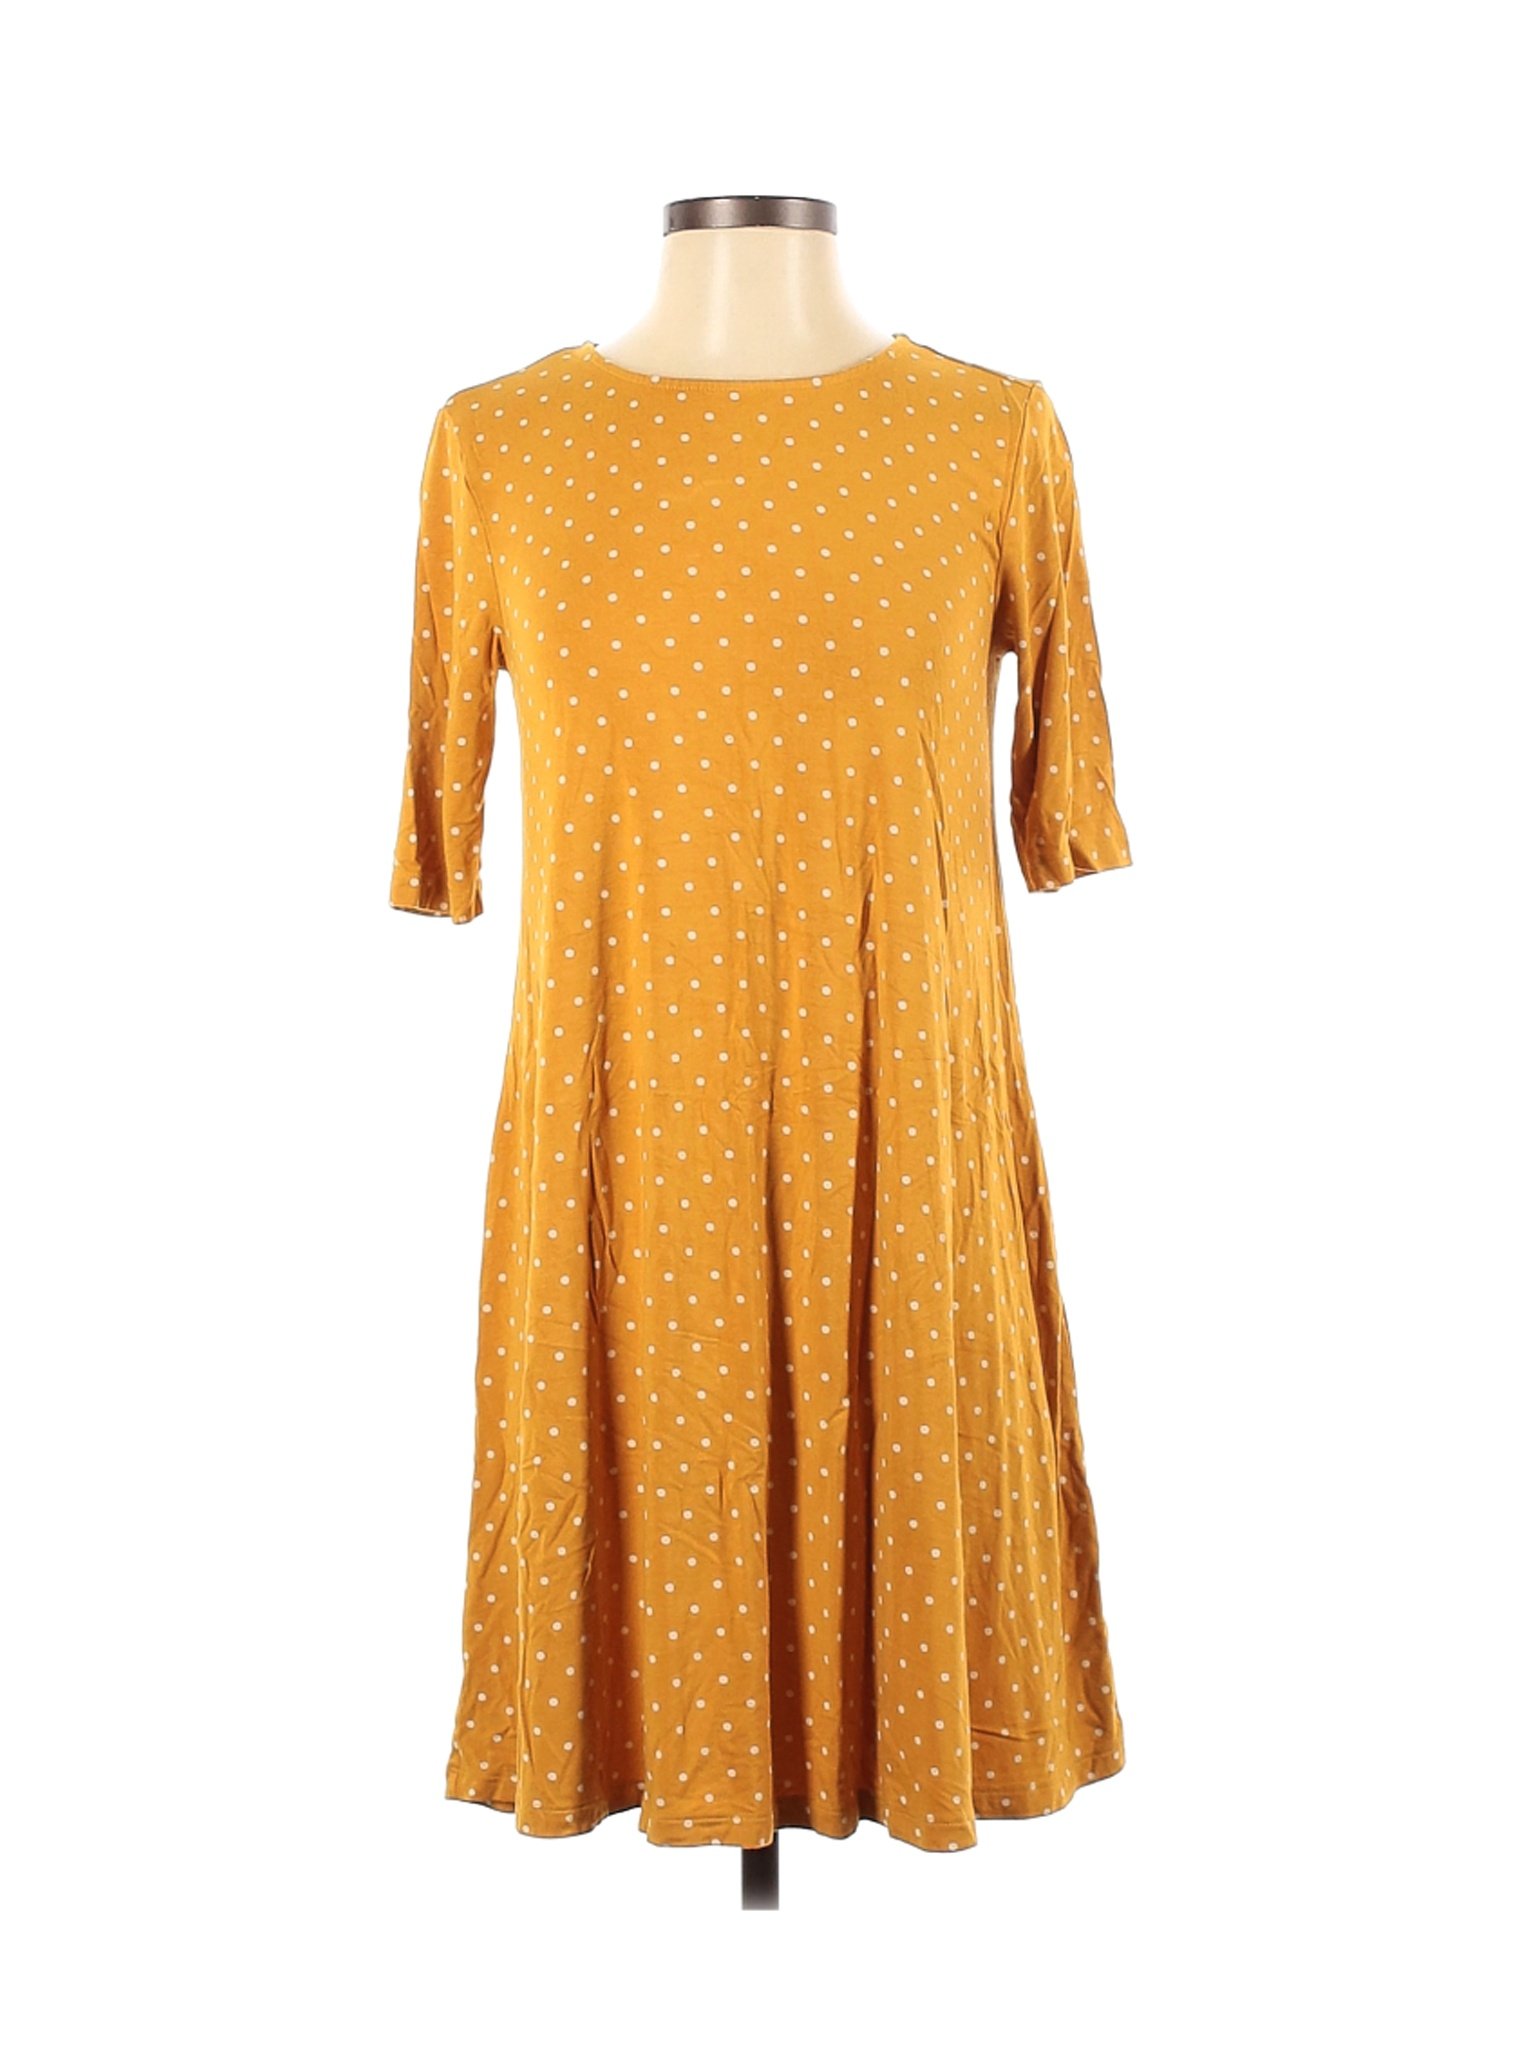 Old Navy Women Yellow Casual Dress S | eBay